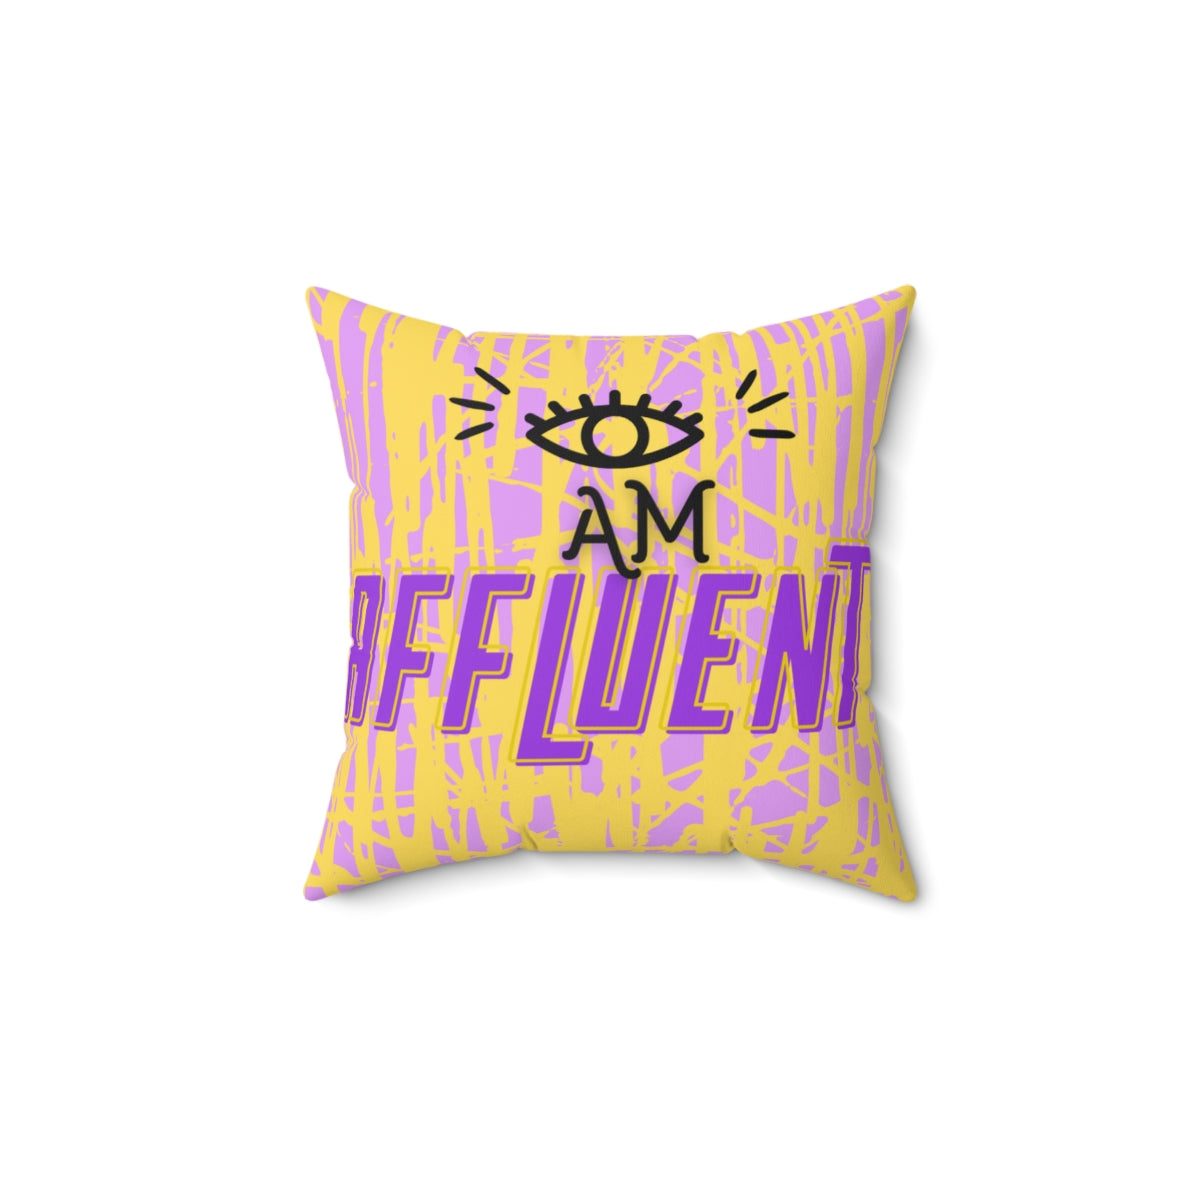 Affirmative “Affluent” Square Pillow